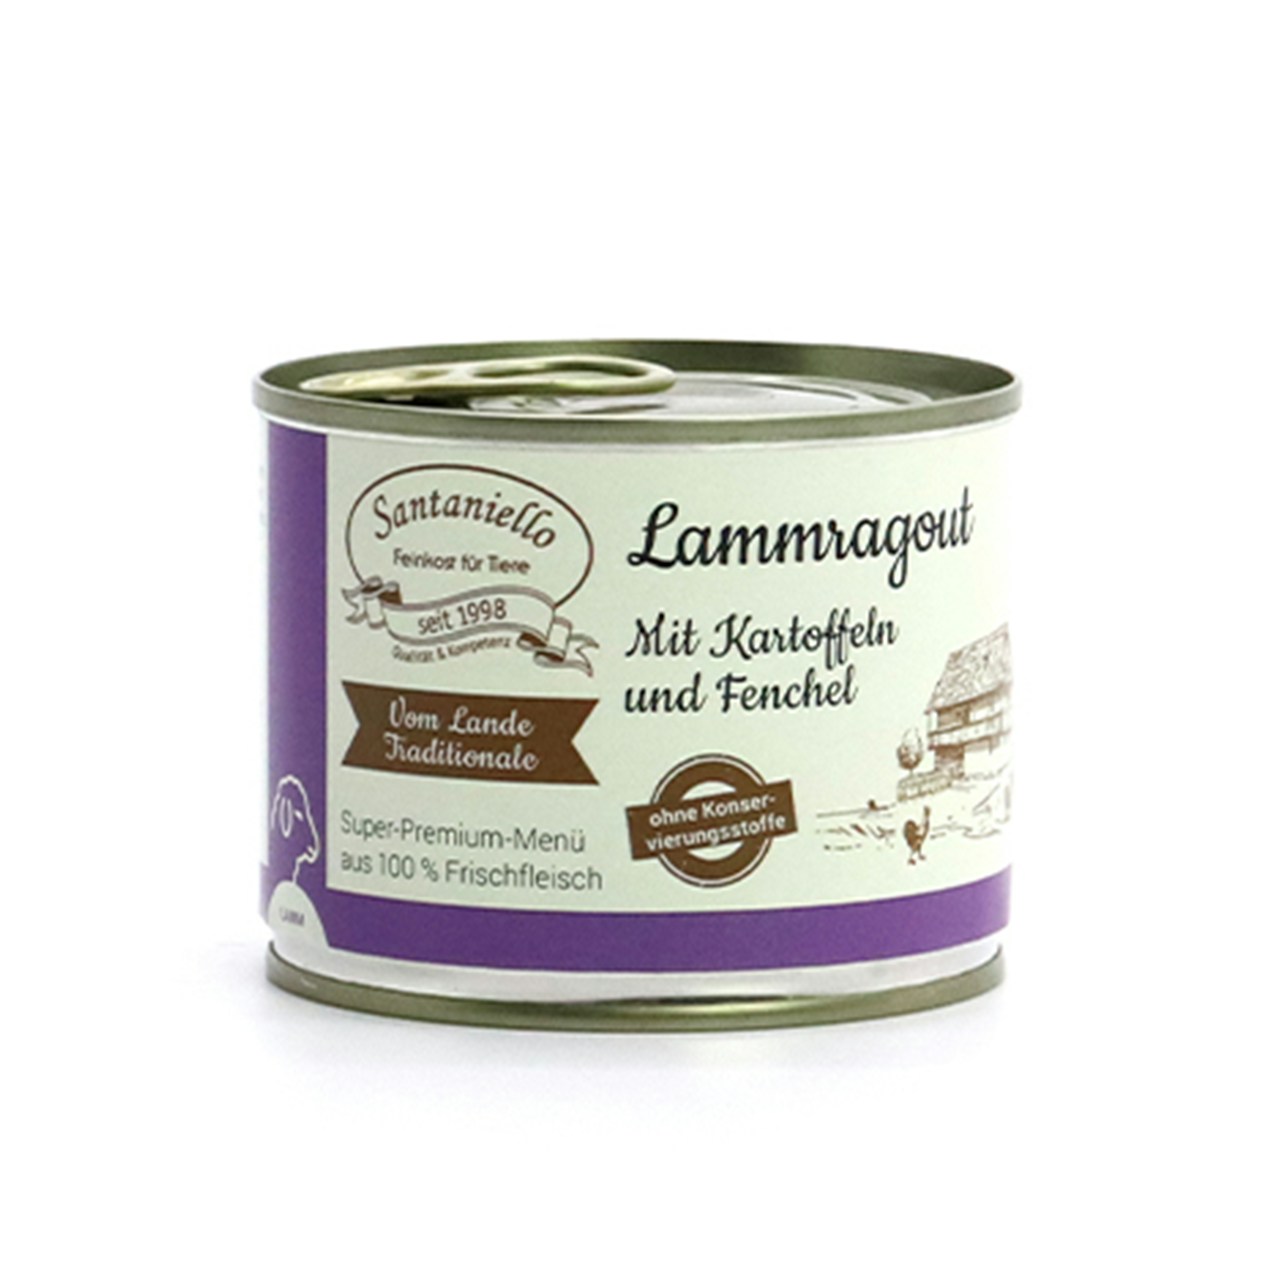 Santaniello Lammragout - Kartoffel & Fenchel